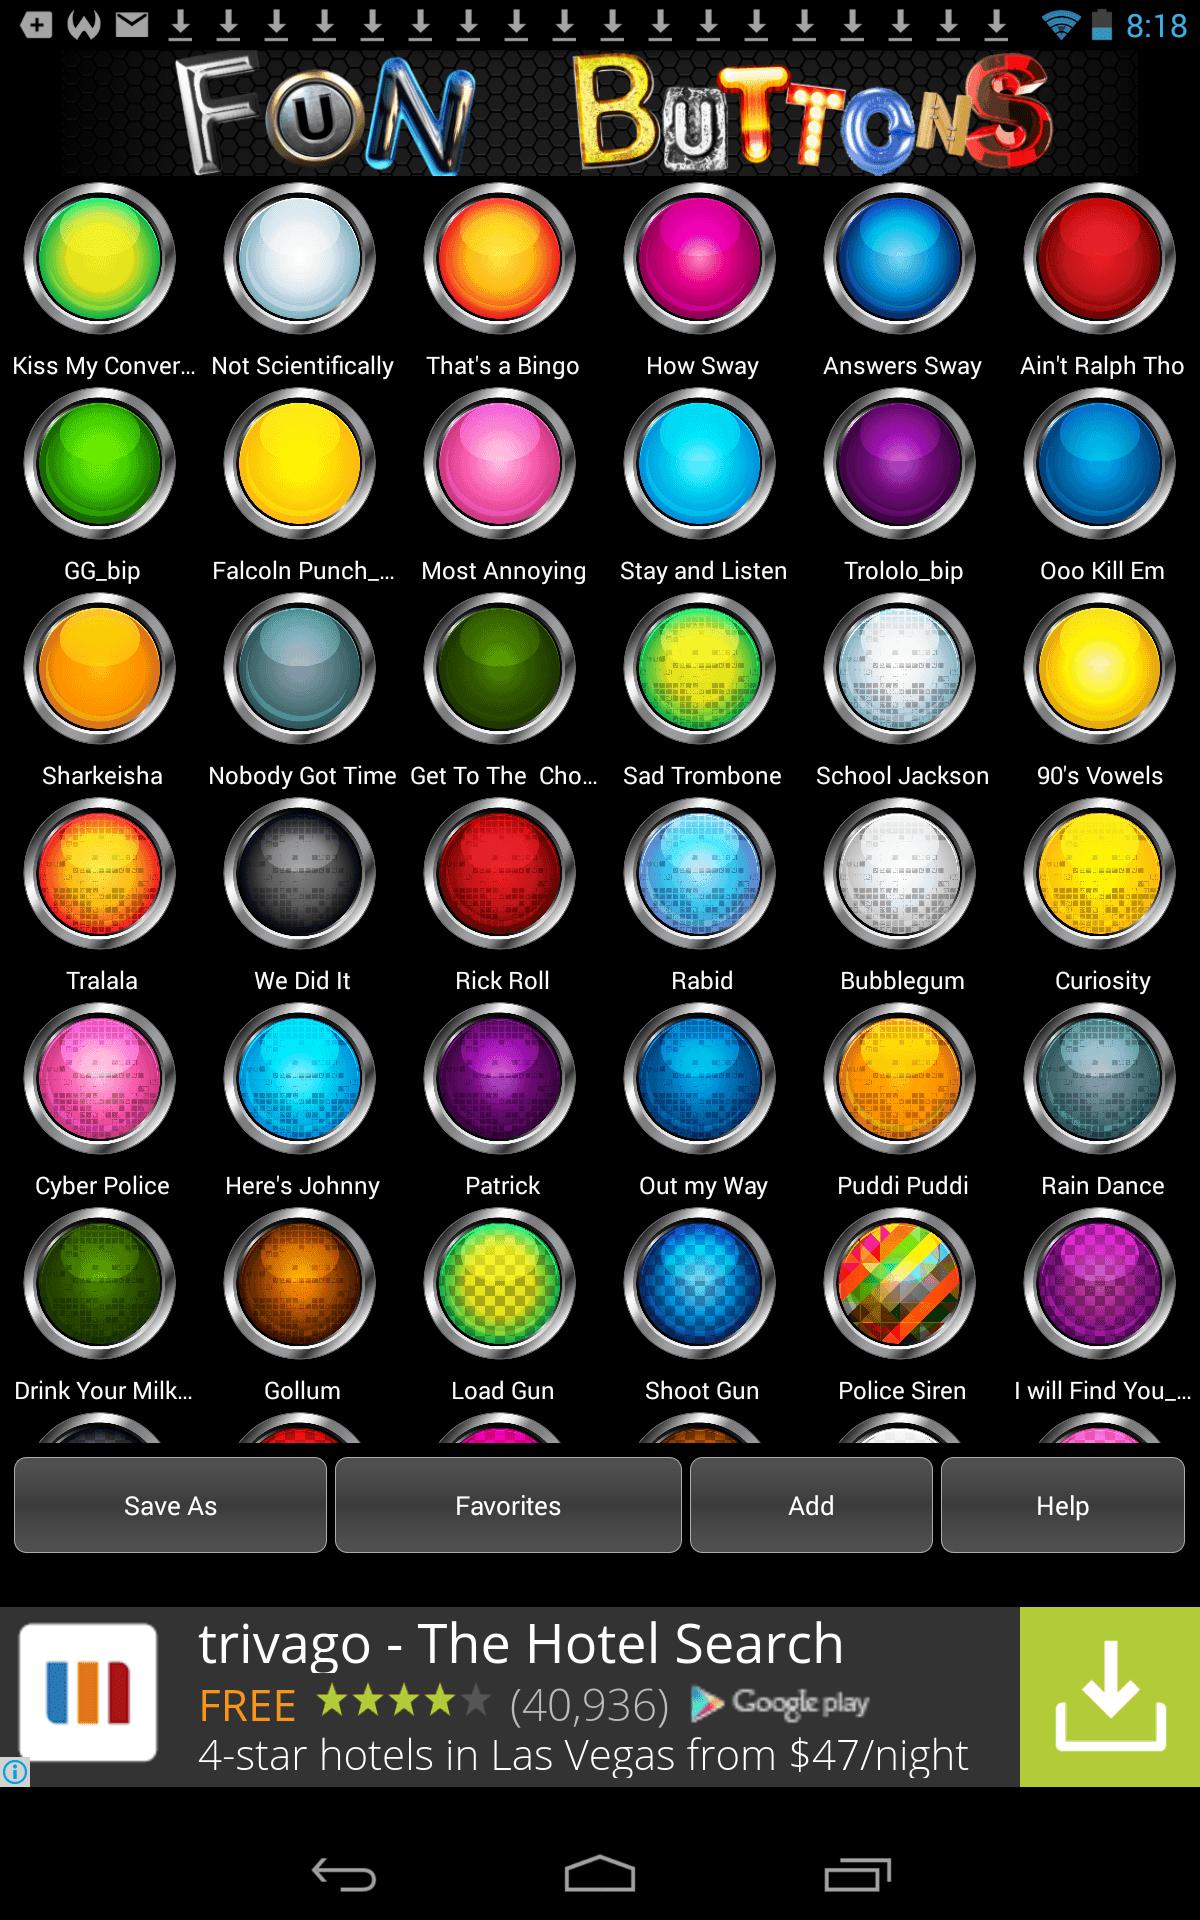 دانلود اپلیکیشن Instant Buttons - Funny Sounds برای آیفون